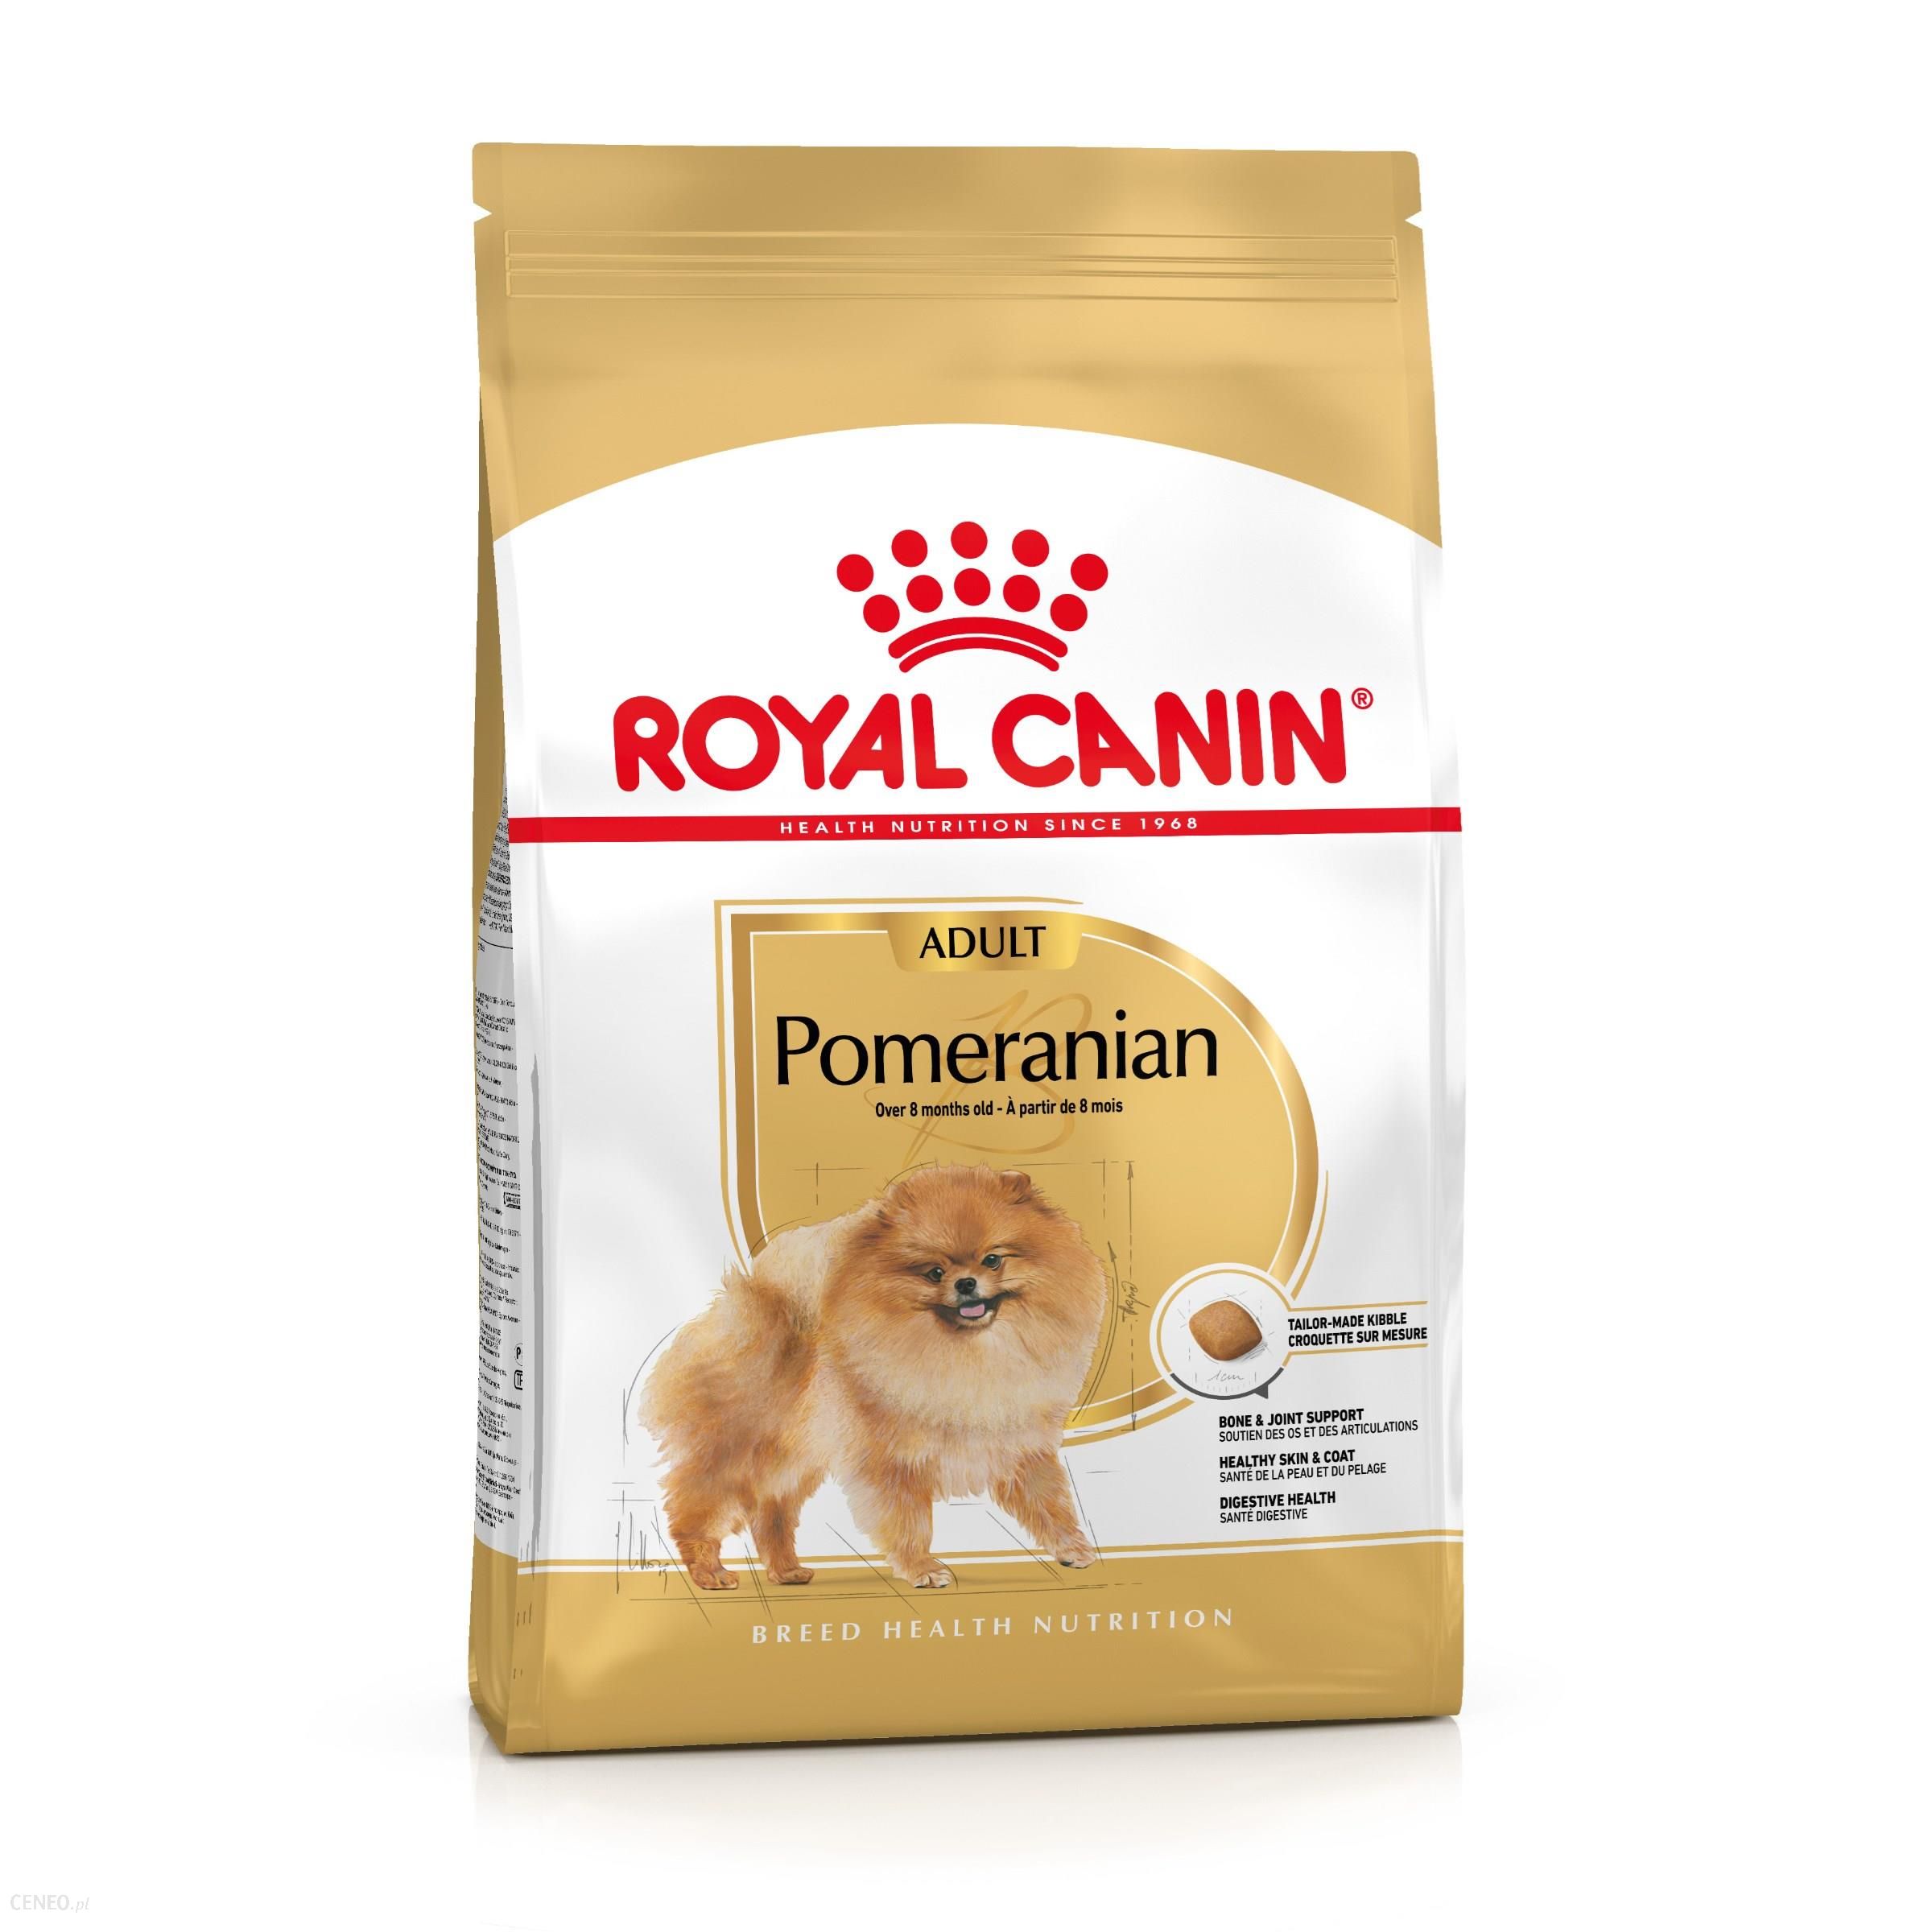 Royal Canin Pomeranian Adult 500G